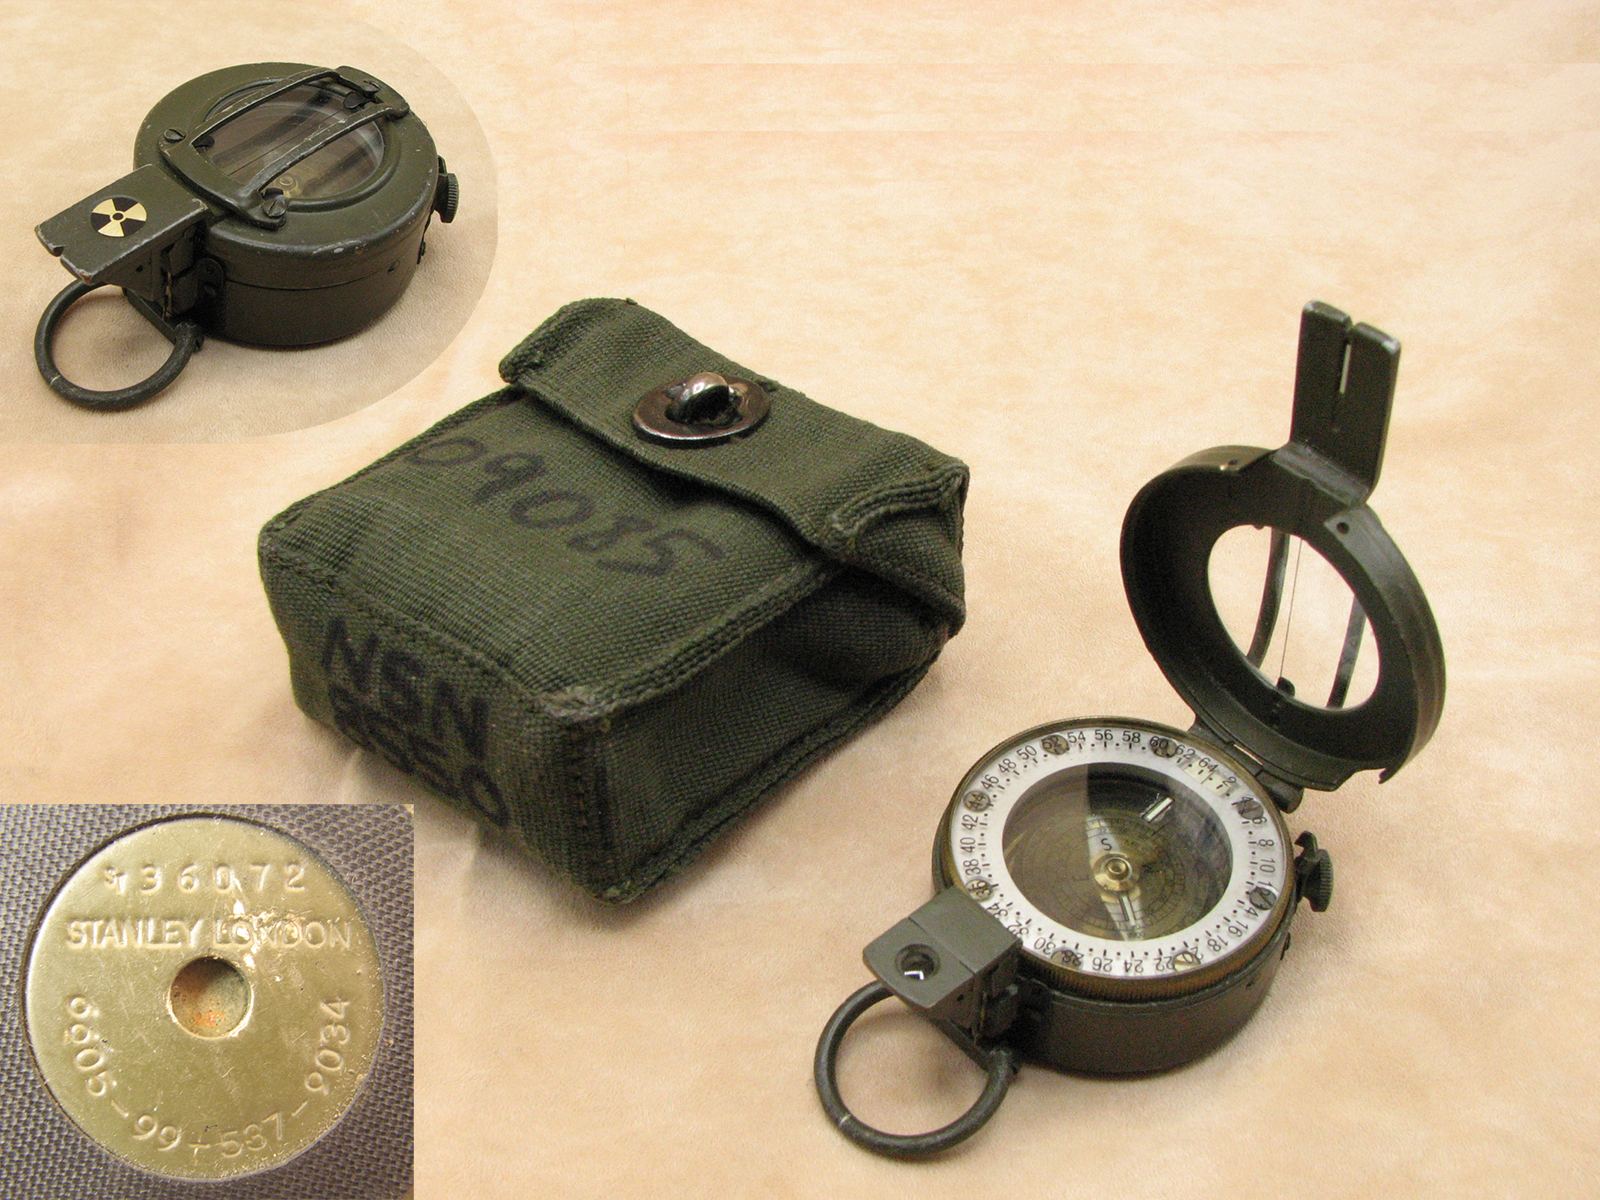 Stanley G150 mils version prismatic compass with patt 58 canvas pouch